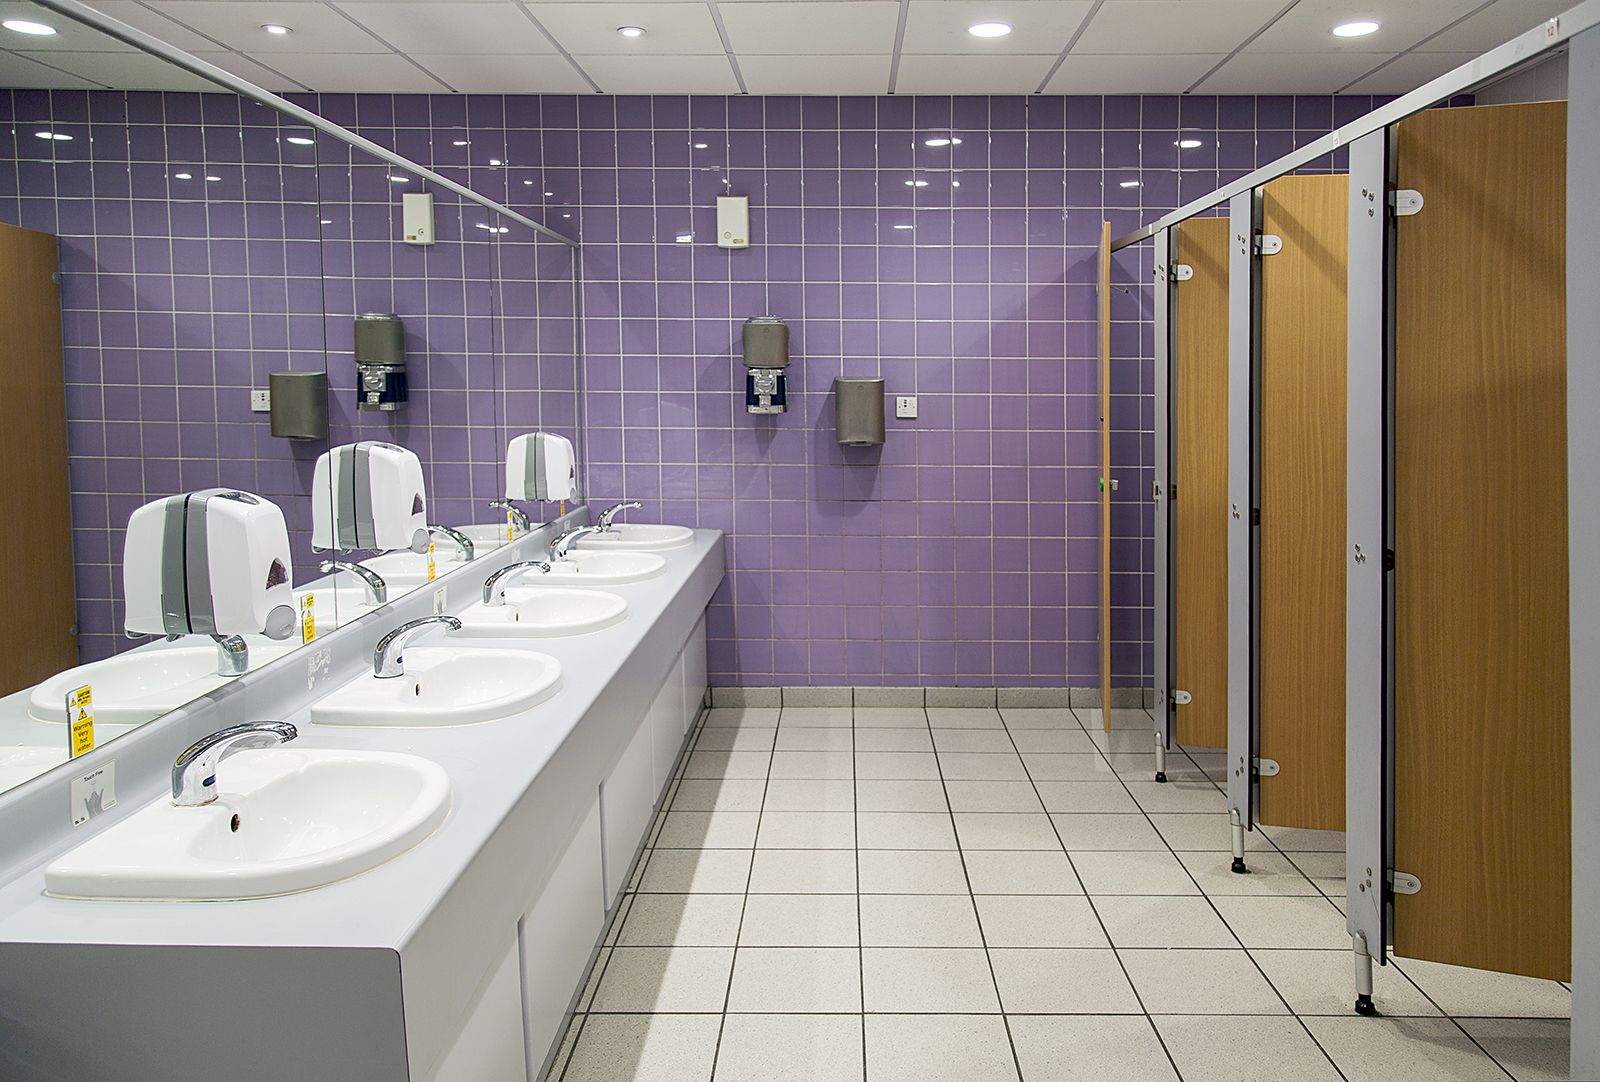 Facilities that Every Bathroom Needs for Wellness & Hygiene!